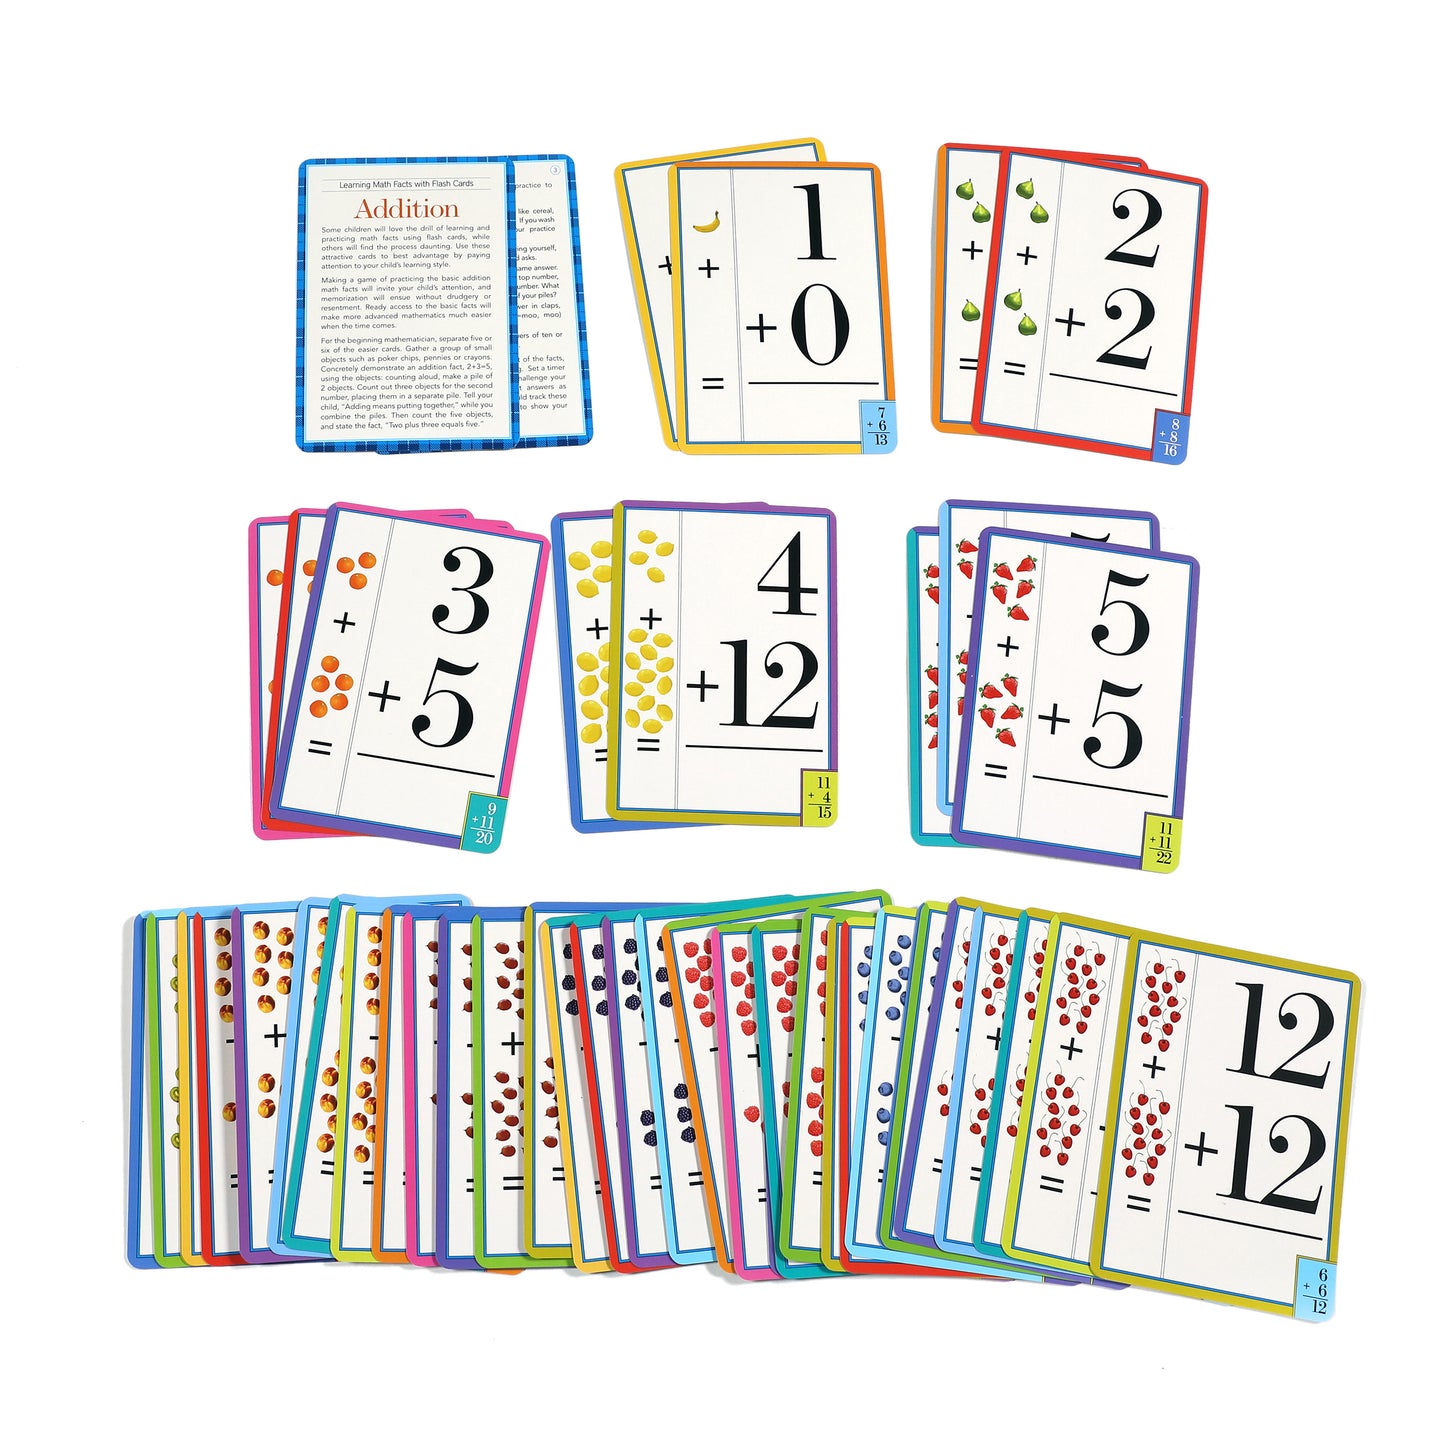 Addition Math Flash Cards for Kids 4+ eeBoo